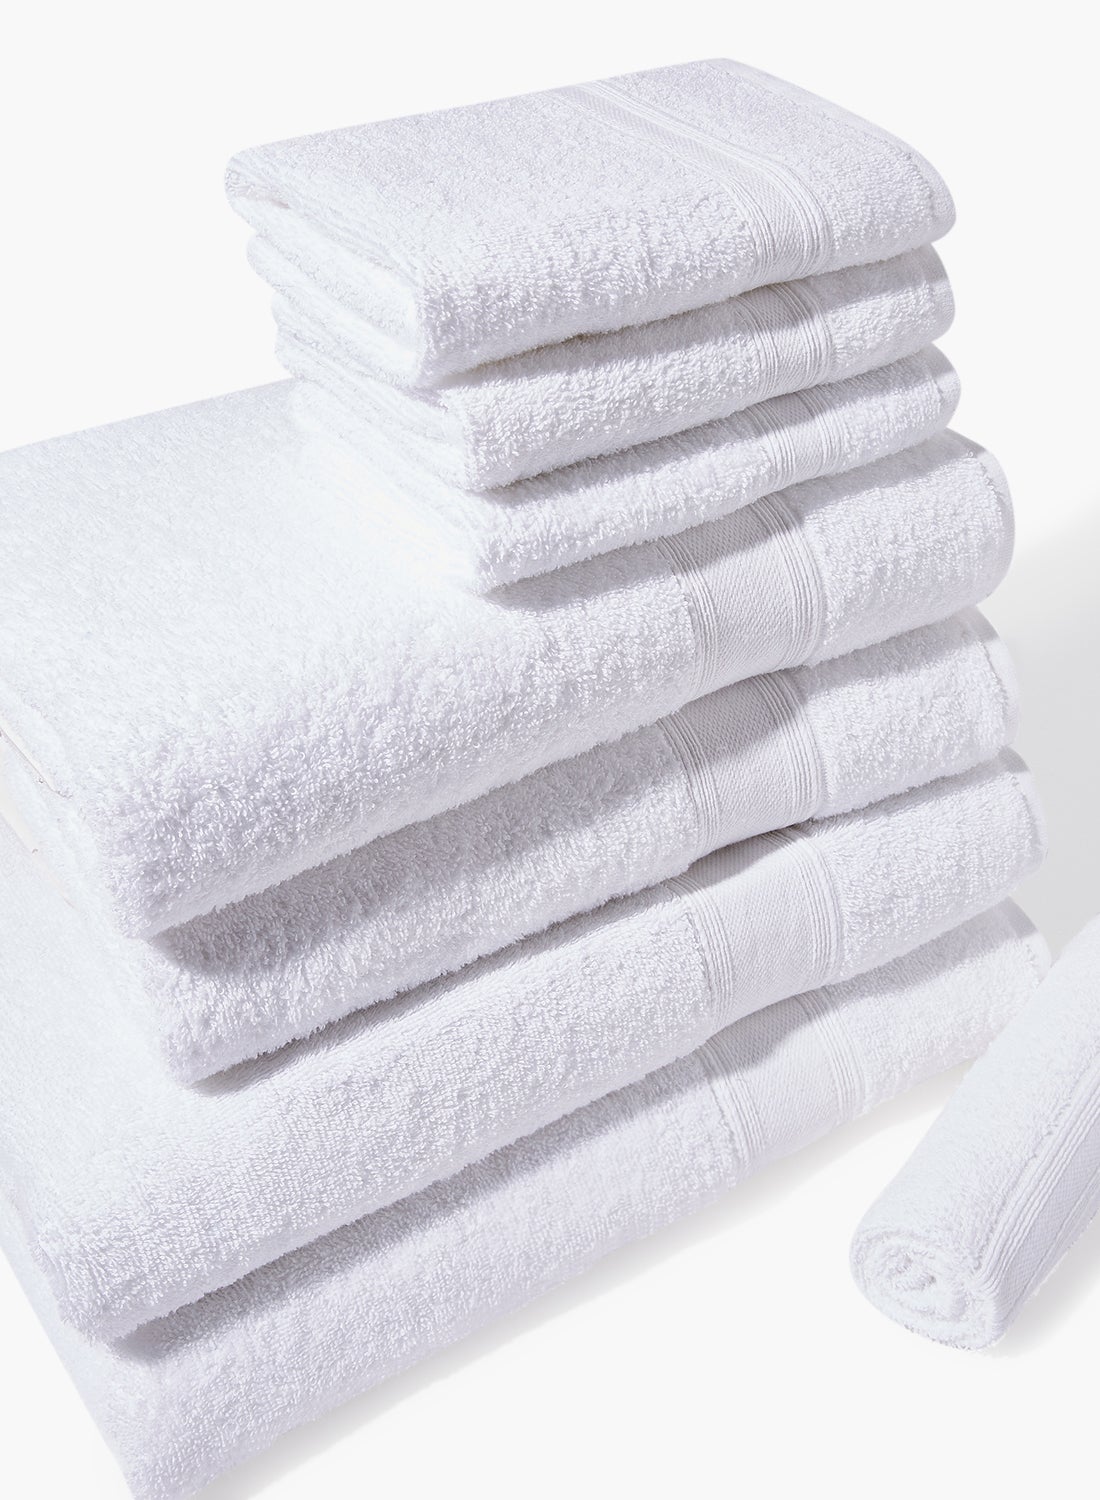 8 Piece Bathroom Towel Set - 400 GSM 100% Cotton Terry - 4 Hand Towel - 2 Face Towel - 2 Bath Towel - White Color -Quick Dry - Super Absorbent 